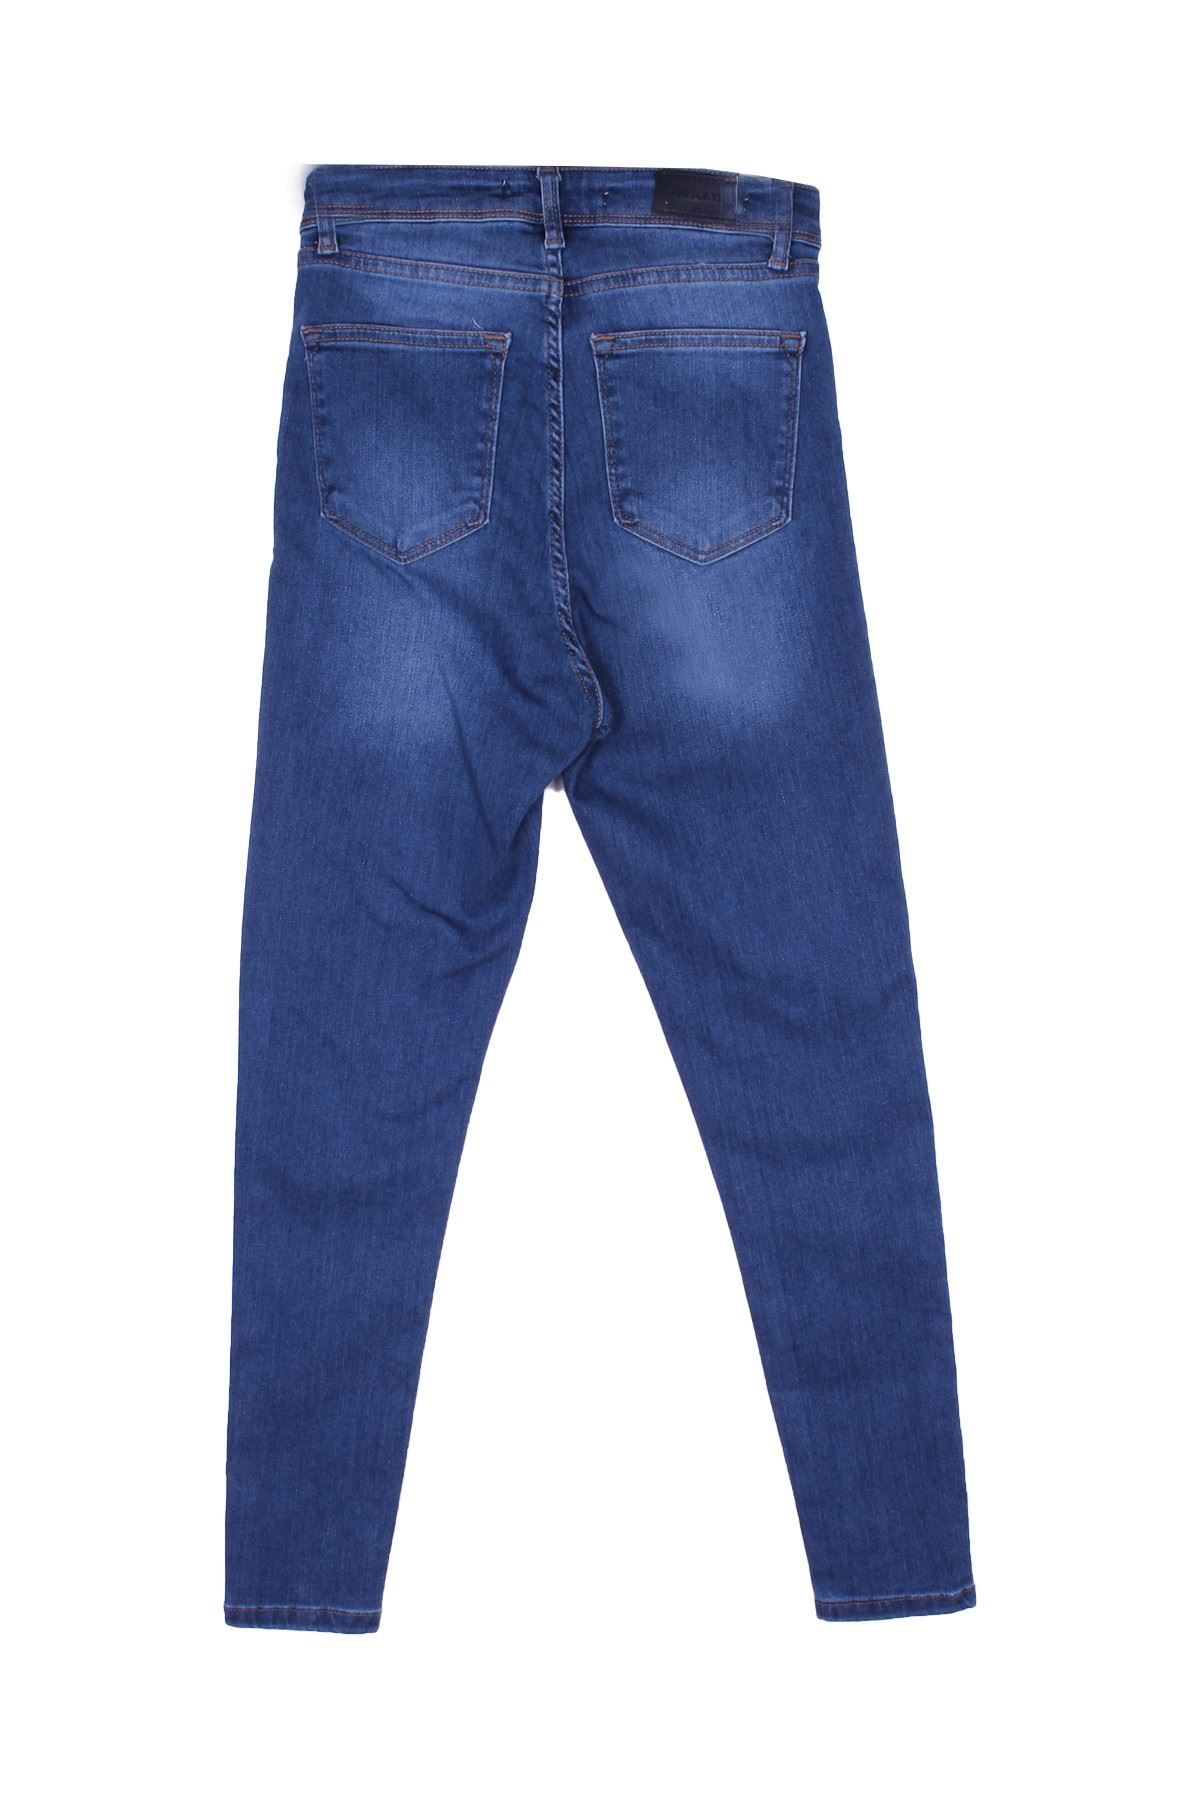 Giyinsen Kadın Mavi Jean Pantolon - 23KD52000001